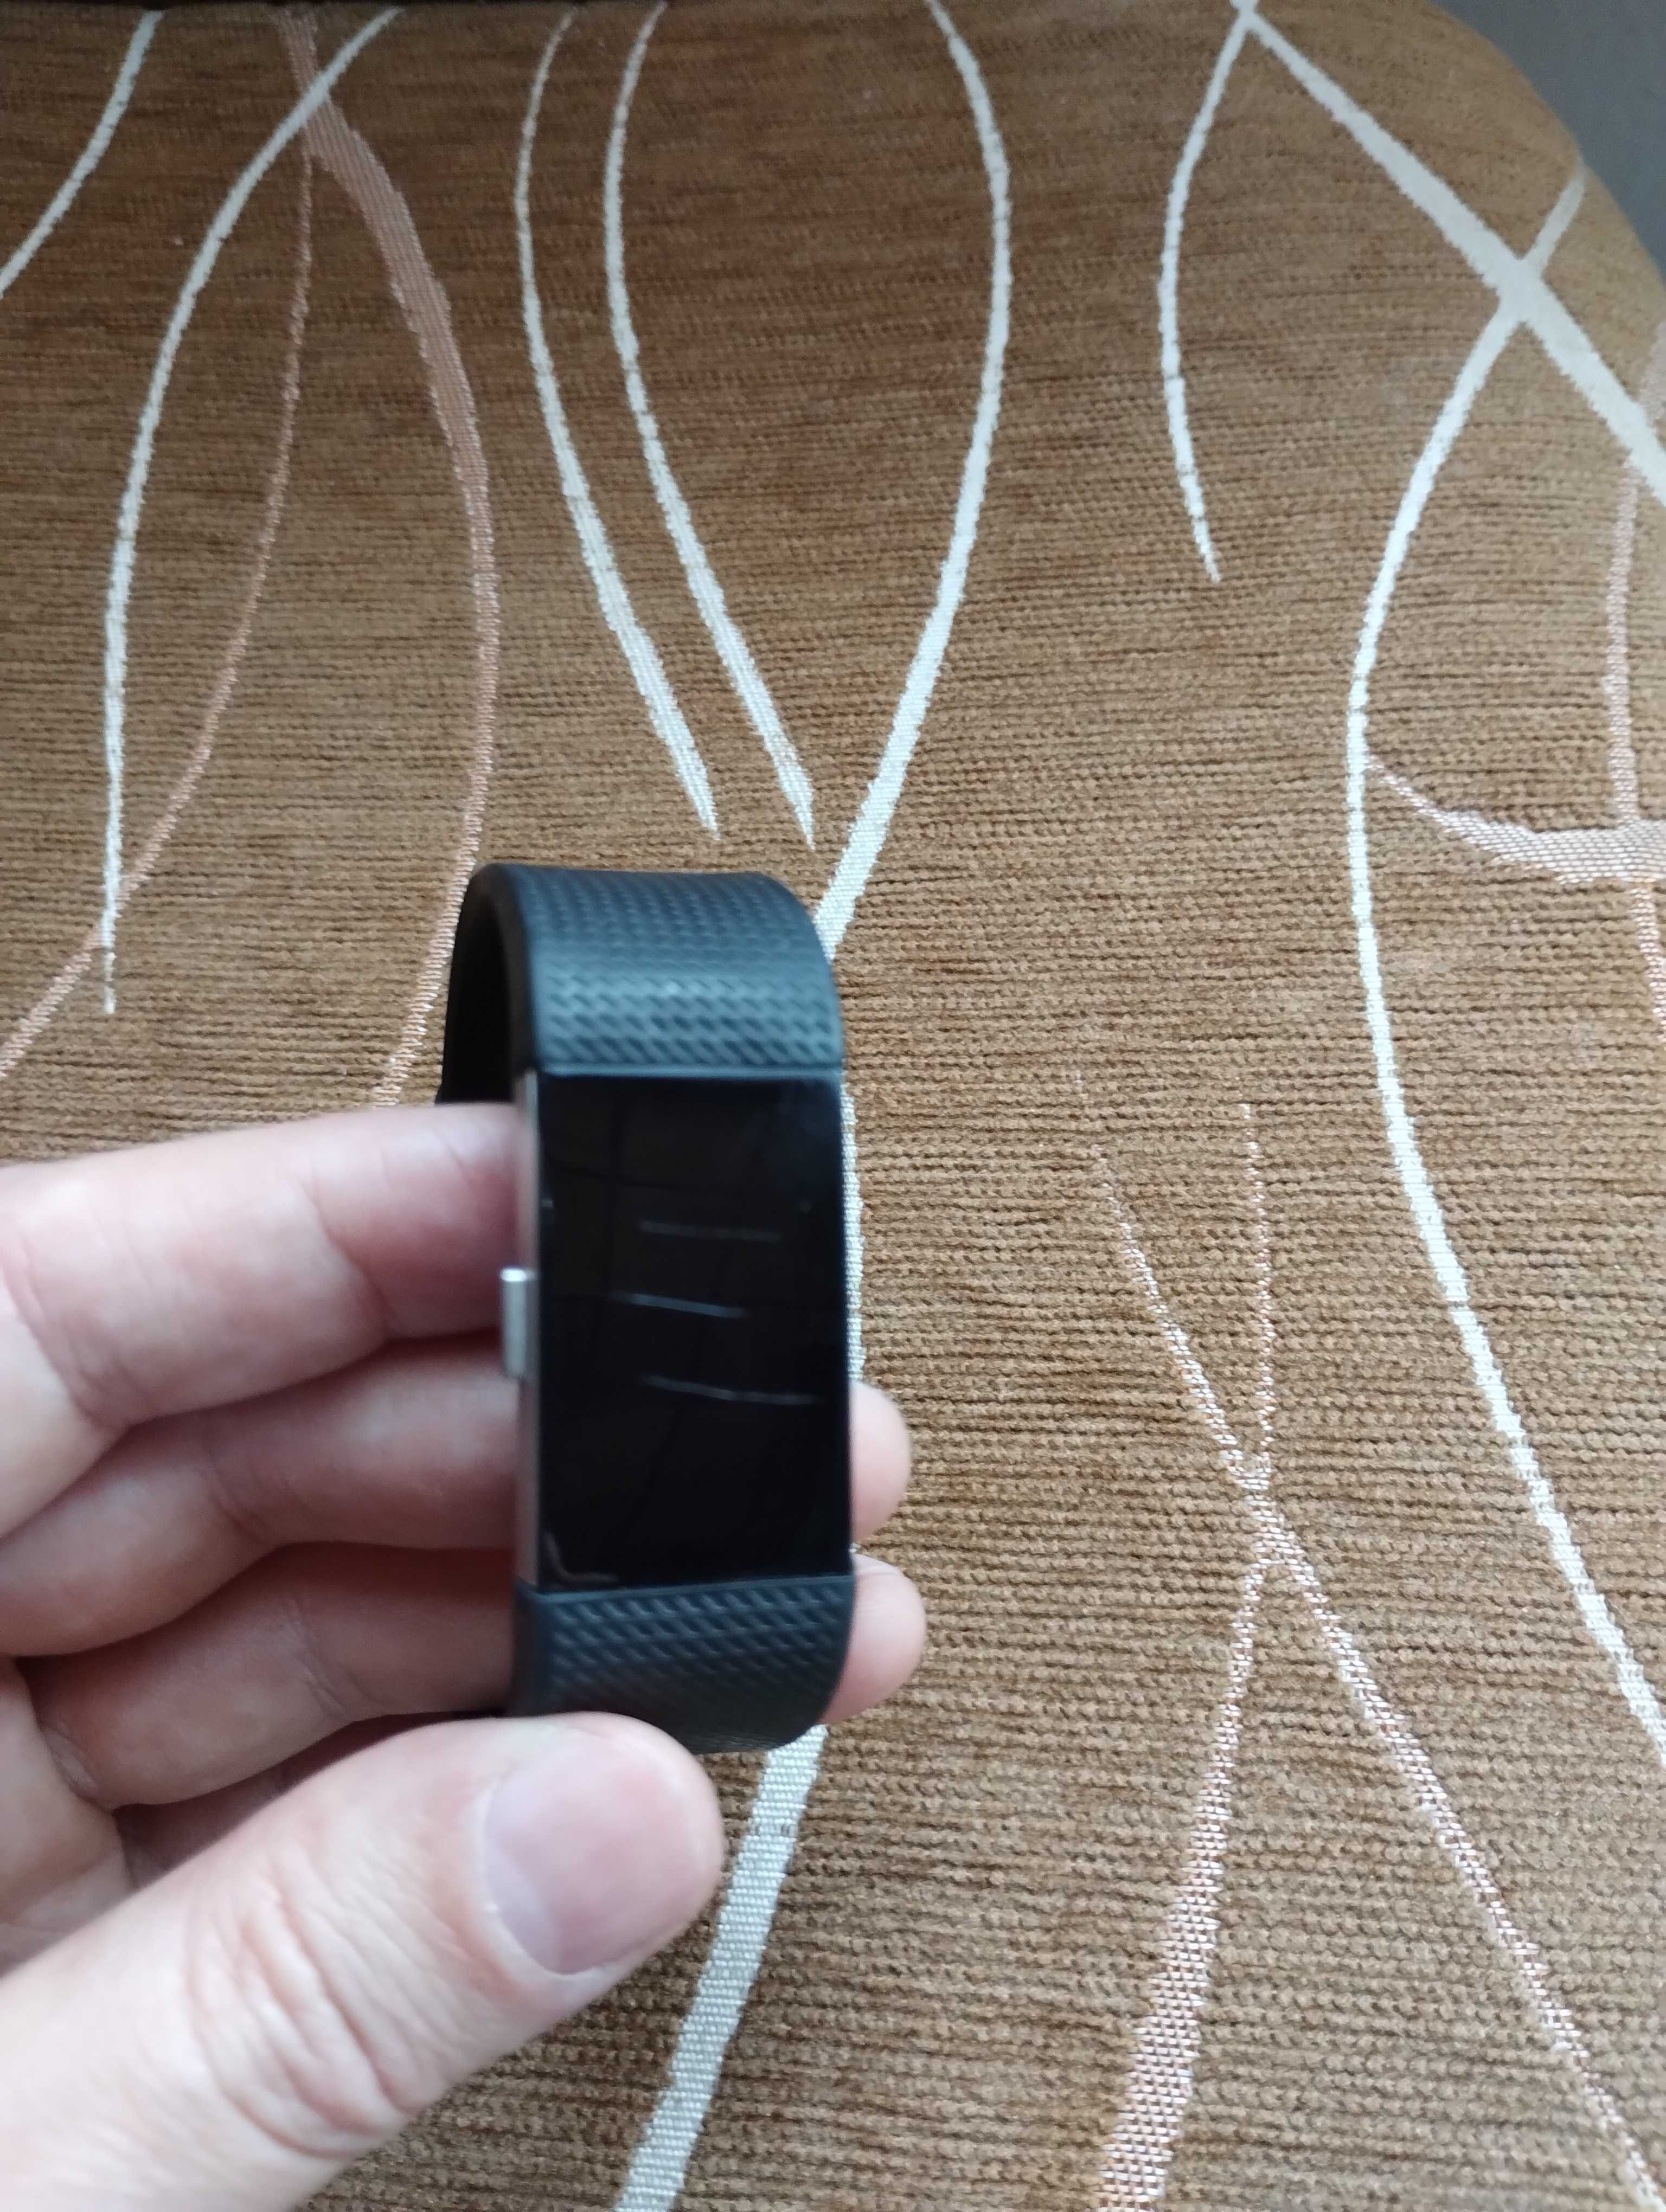 Smartwatch Fitbit Charge 2 czarny opaska bransoletka fitness Black